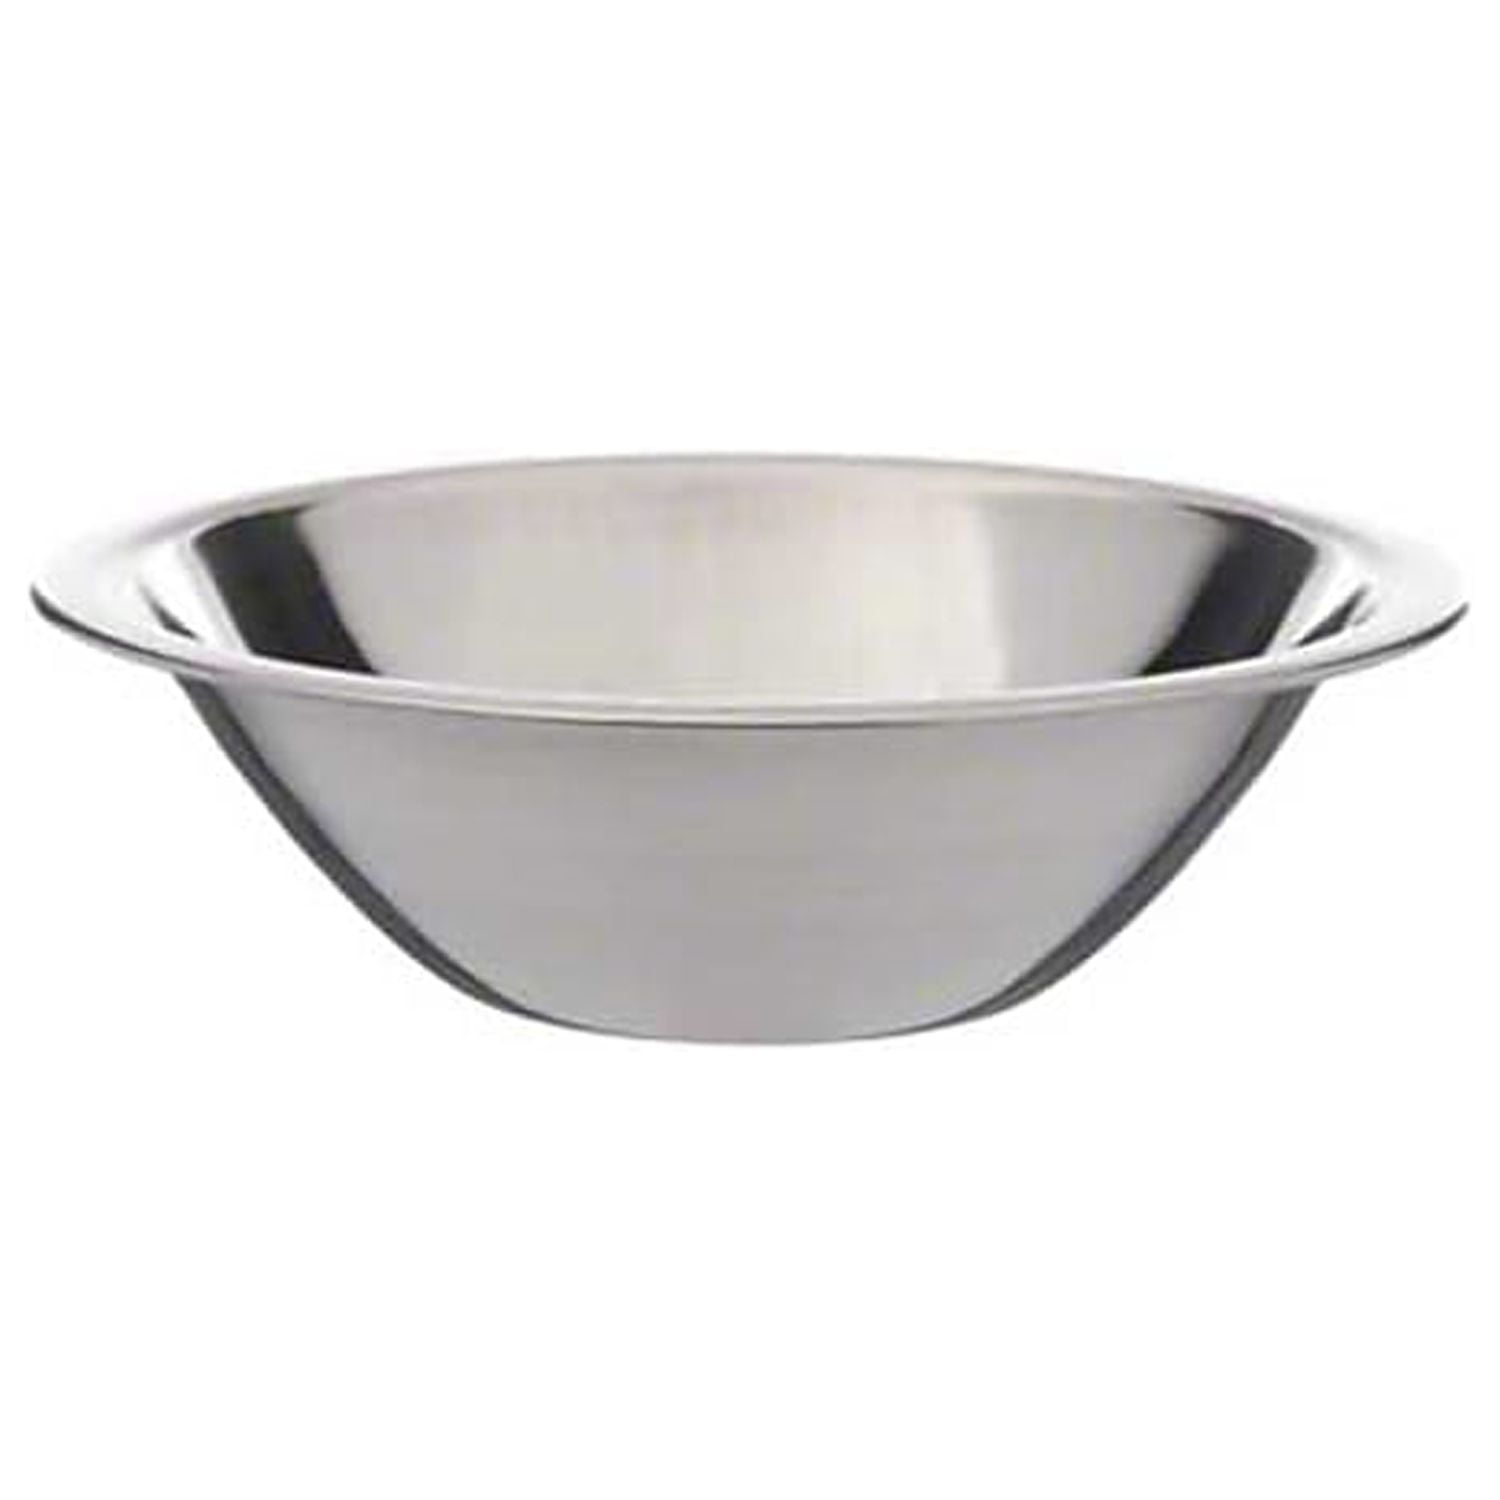 Mixing Bowl 5 quart, 11 1/2” diameter